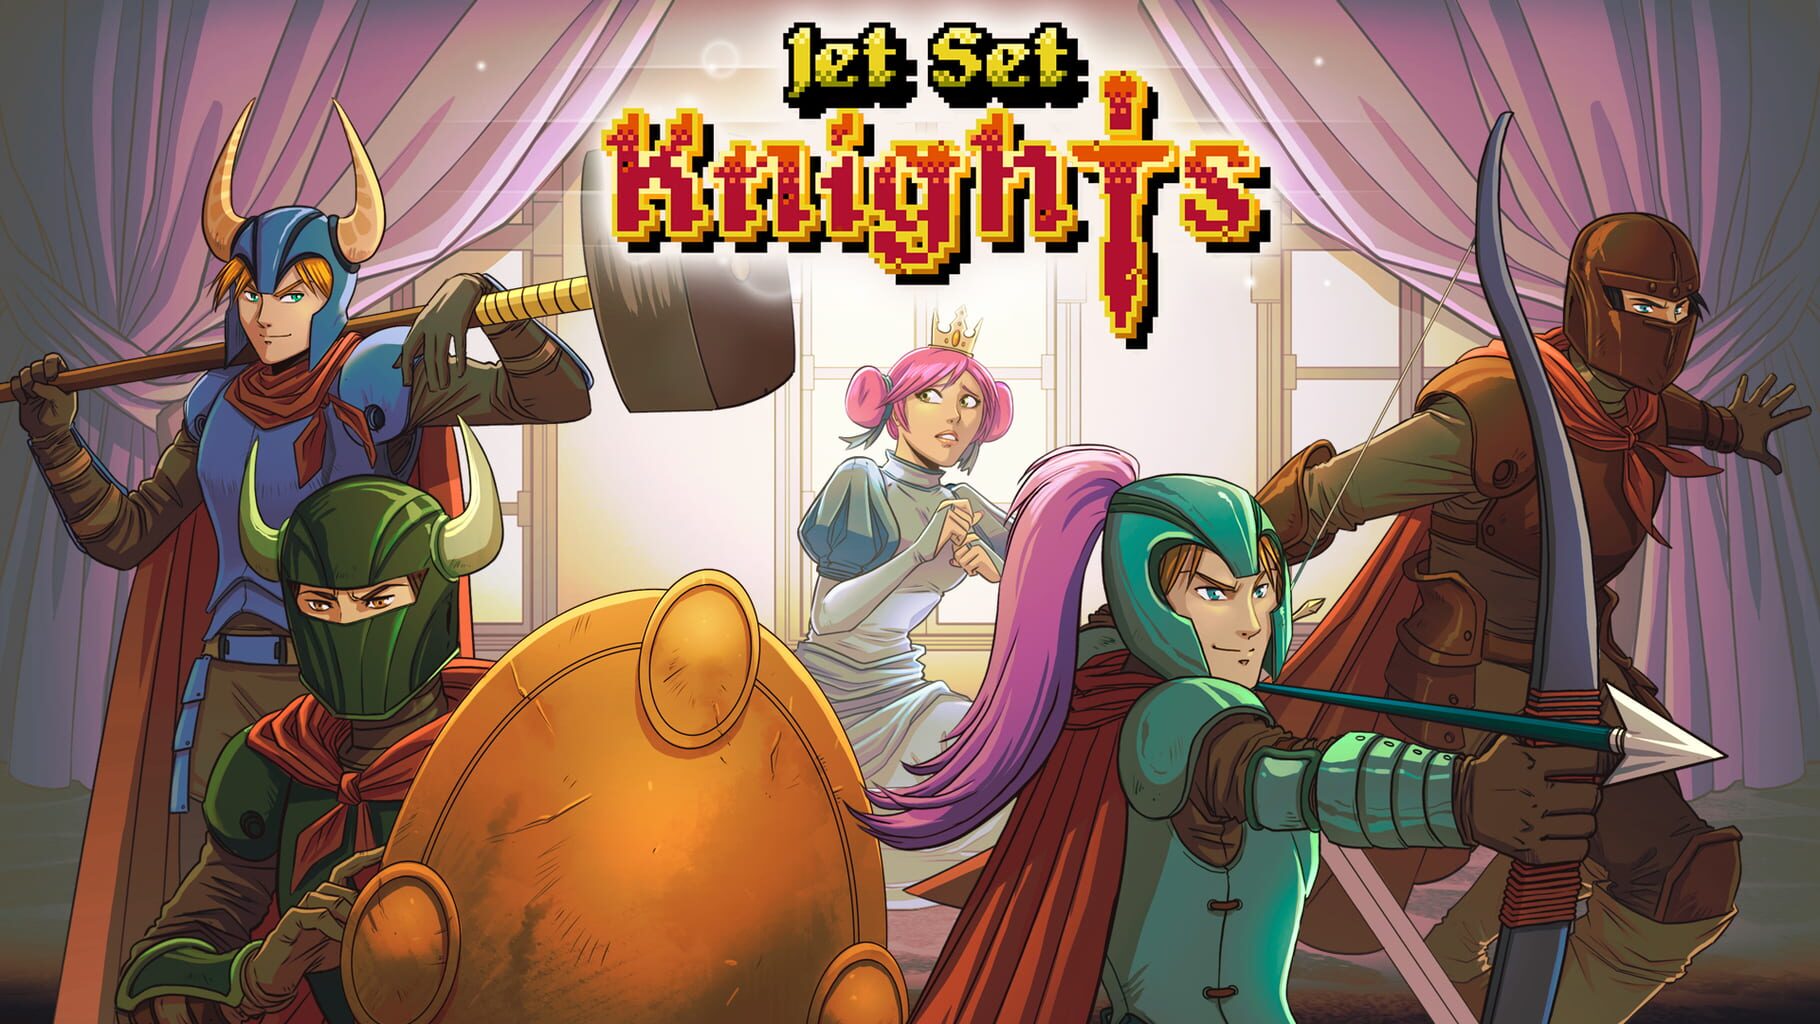 Jet Set Knights artwork